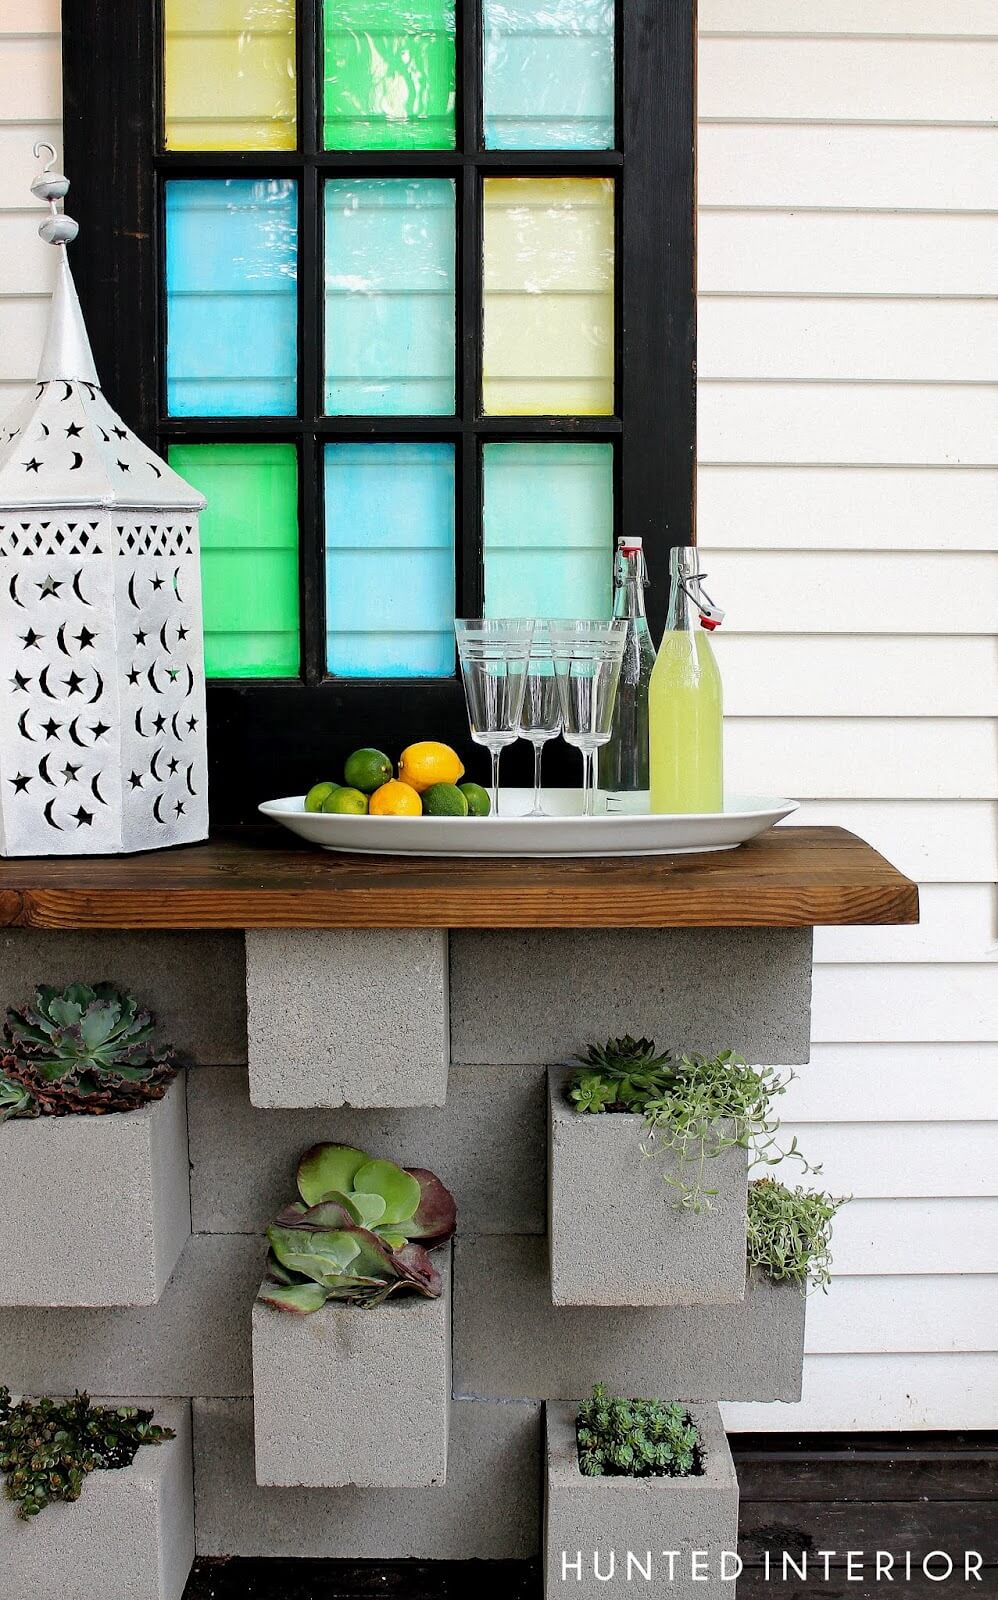 16 Genius DIY Outdoor Bar Ideas You Must Craft For Your Backyard